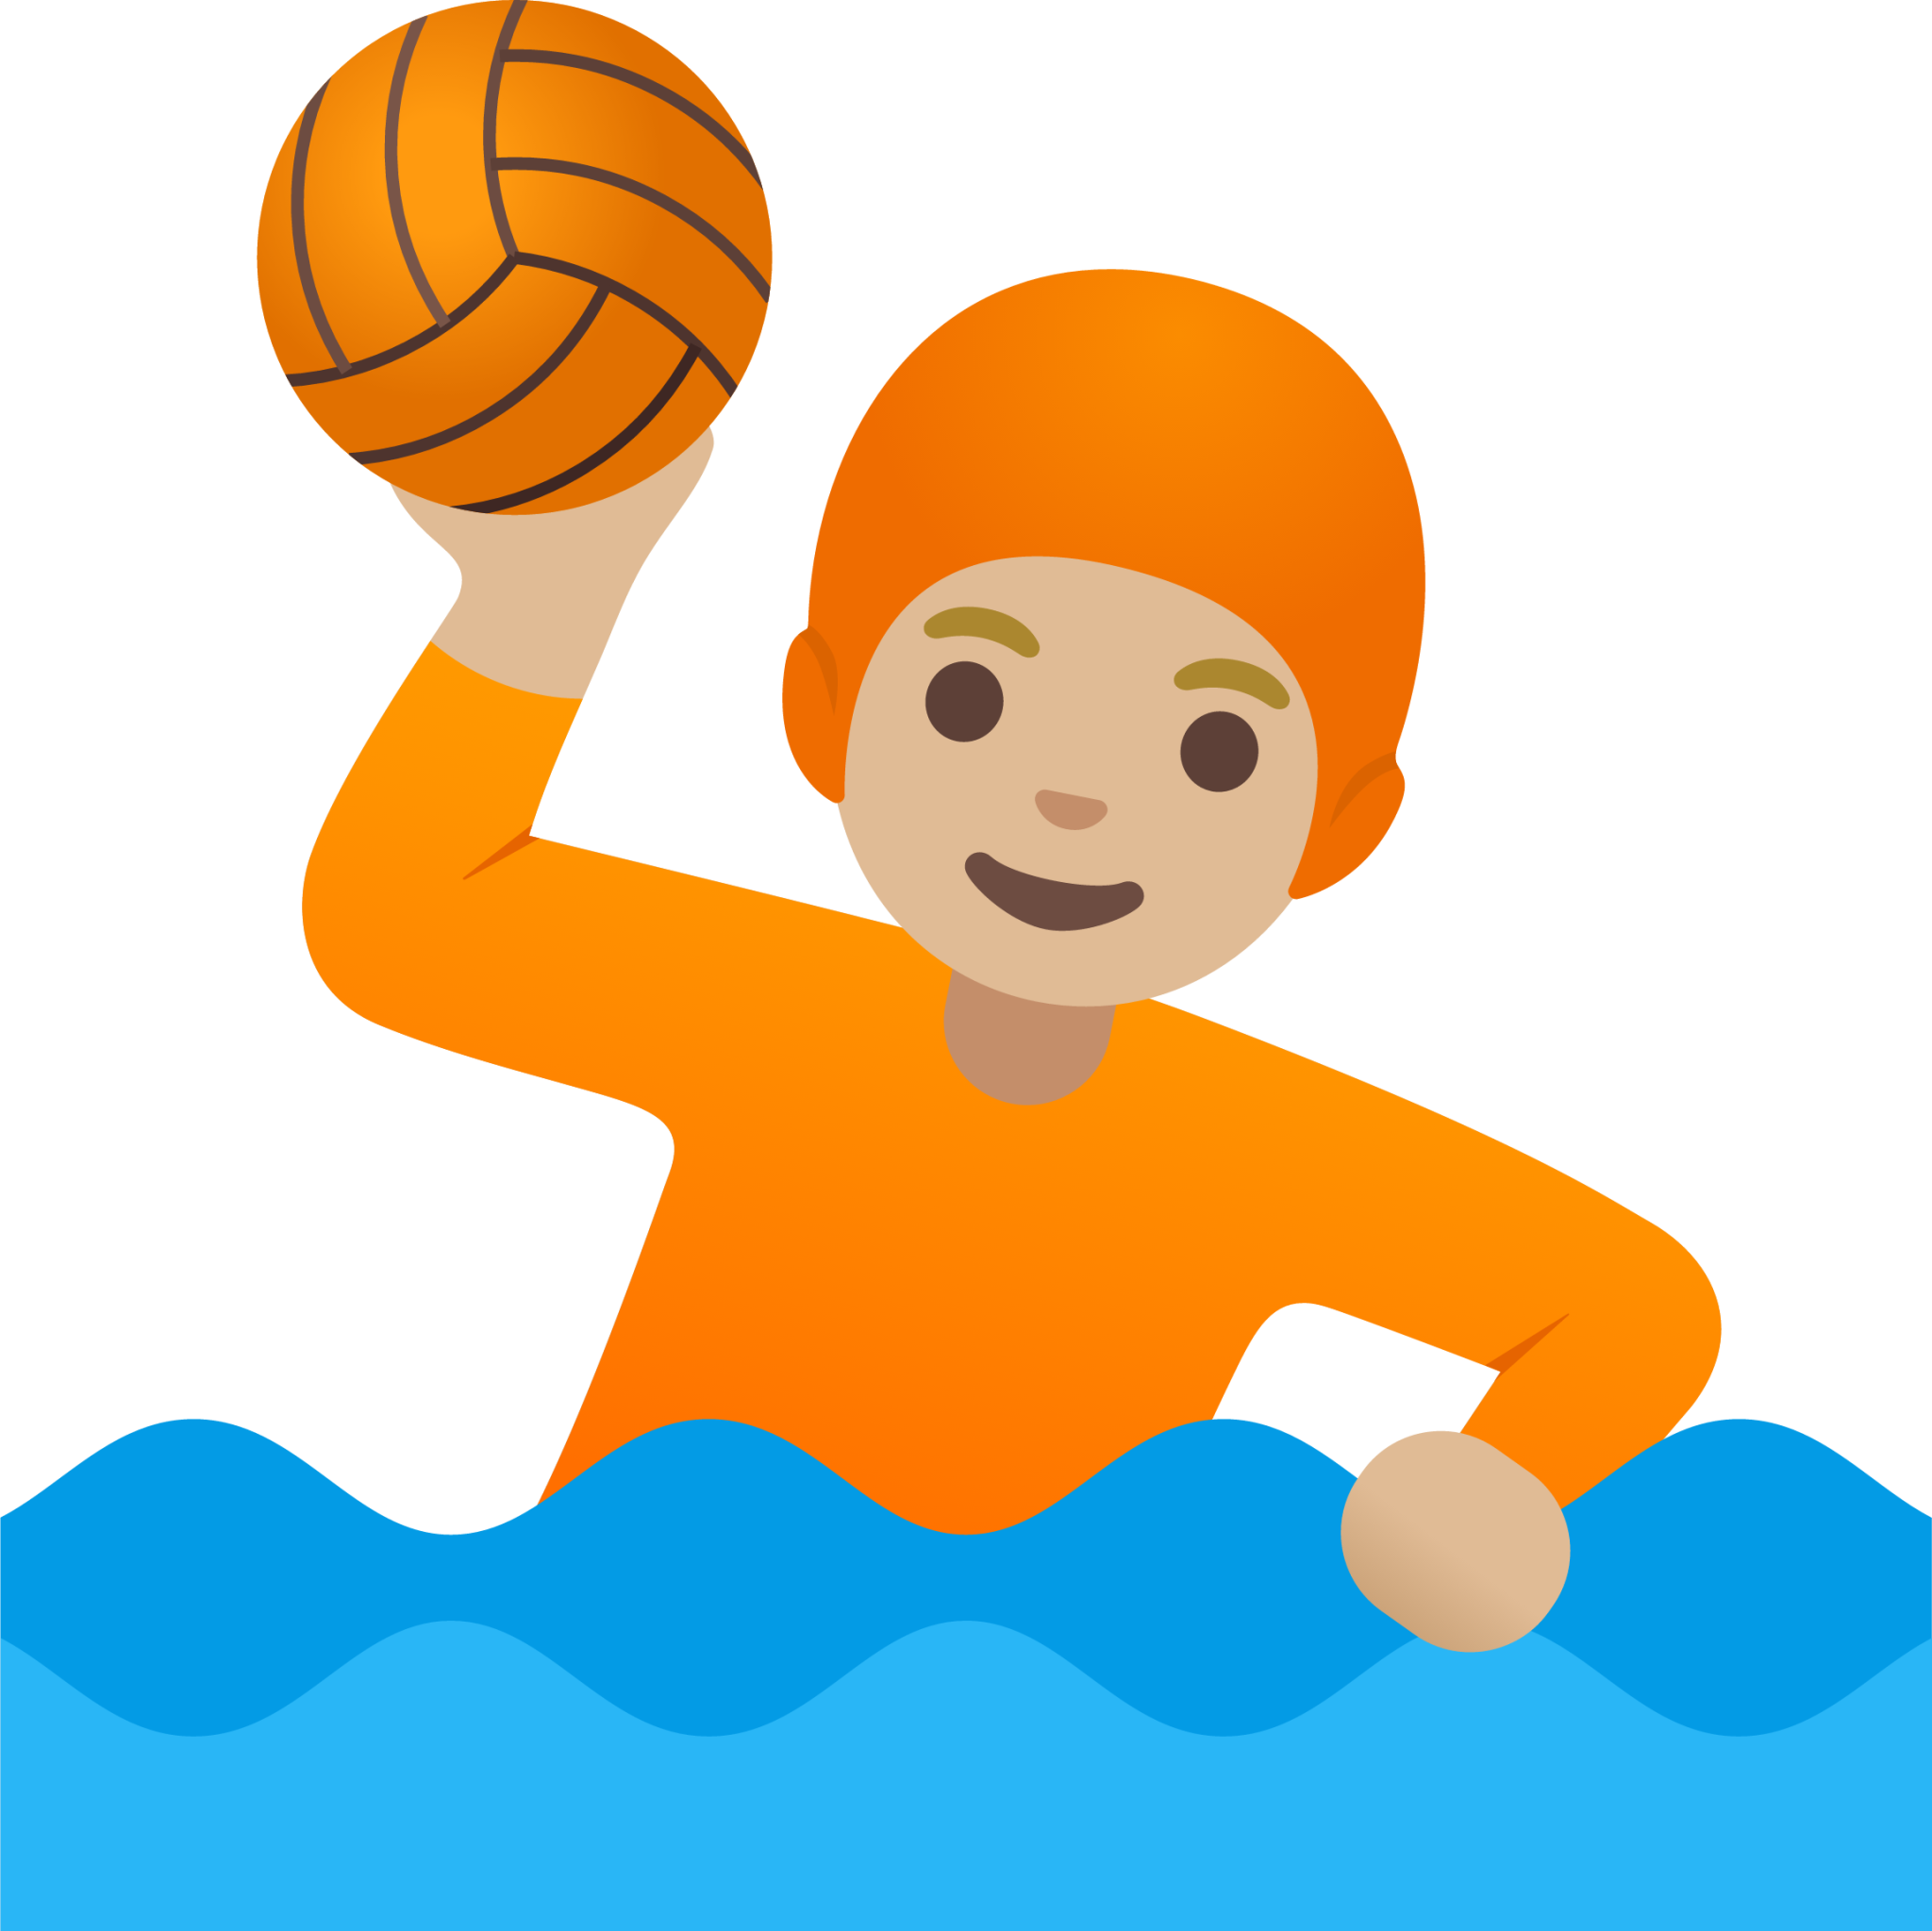 person playing water polo: medium-light skin tone emoji